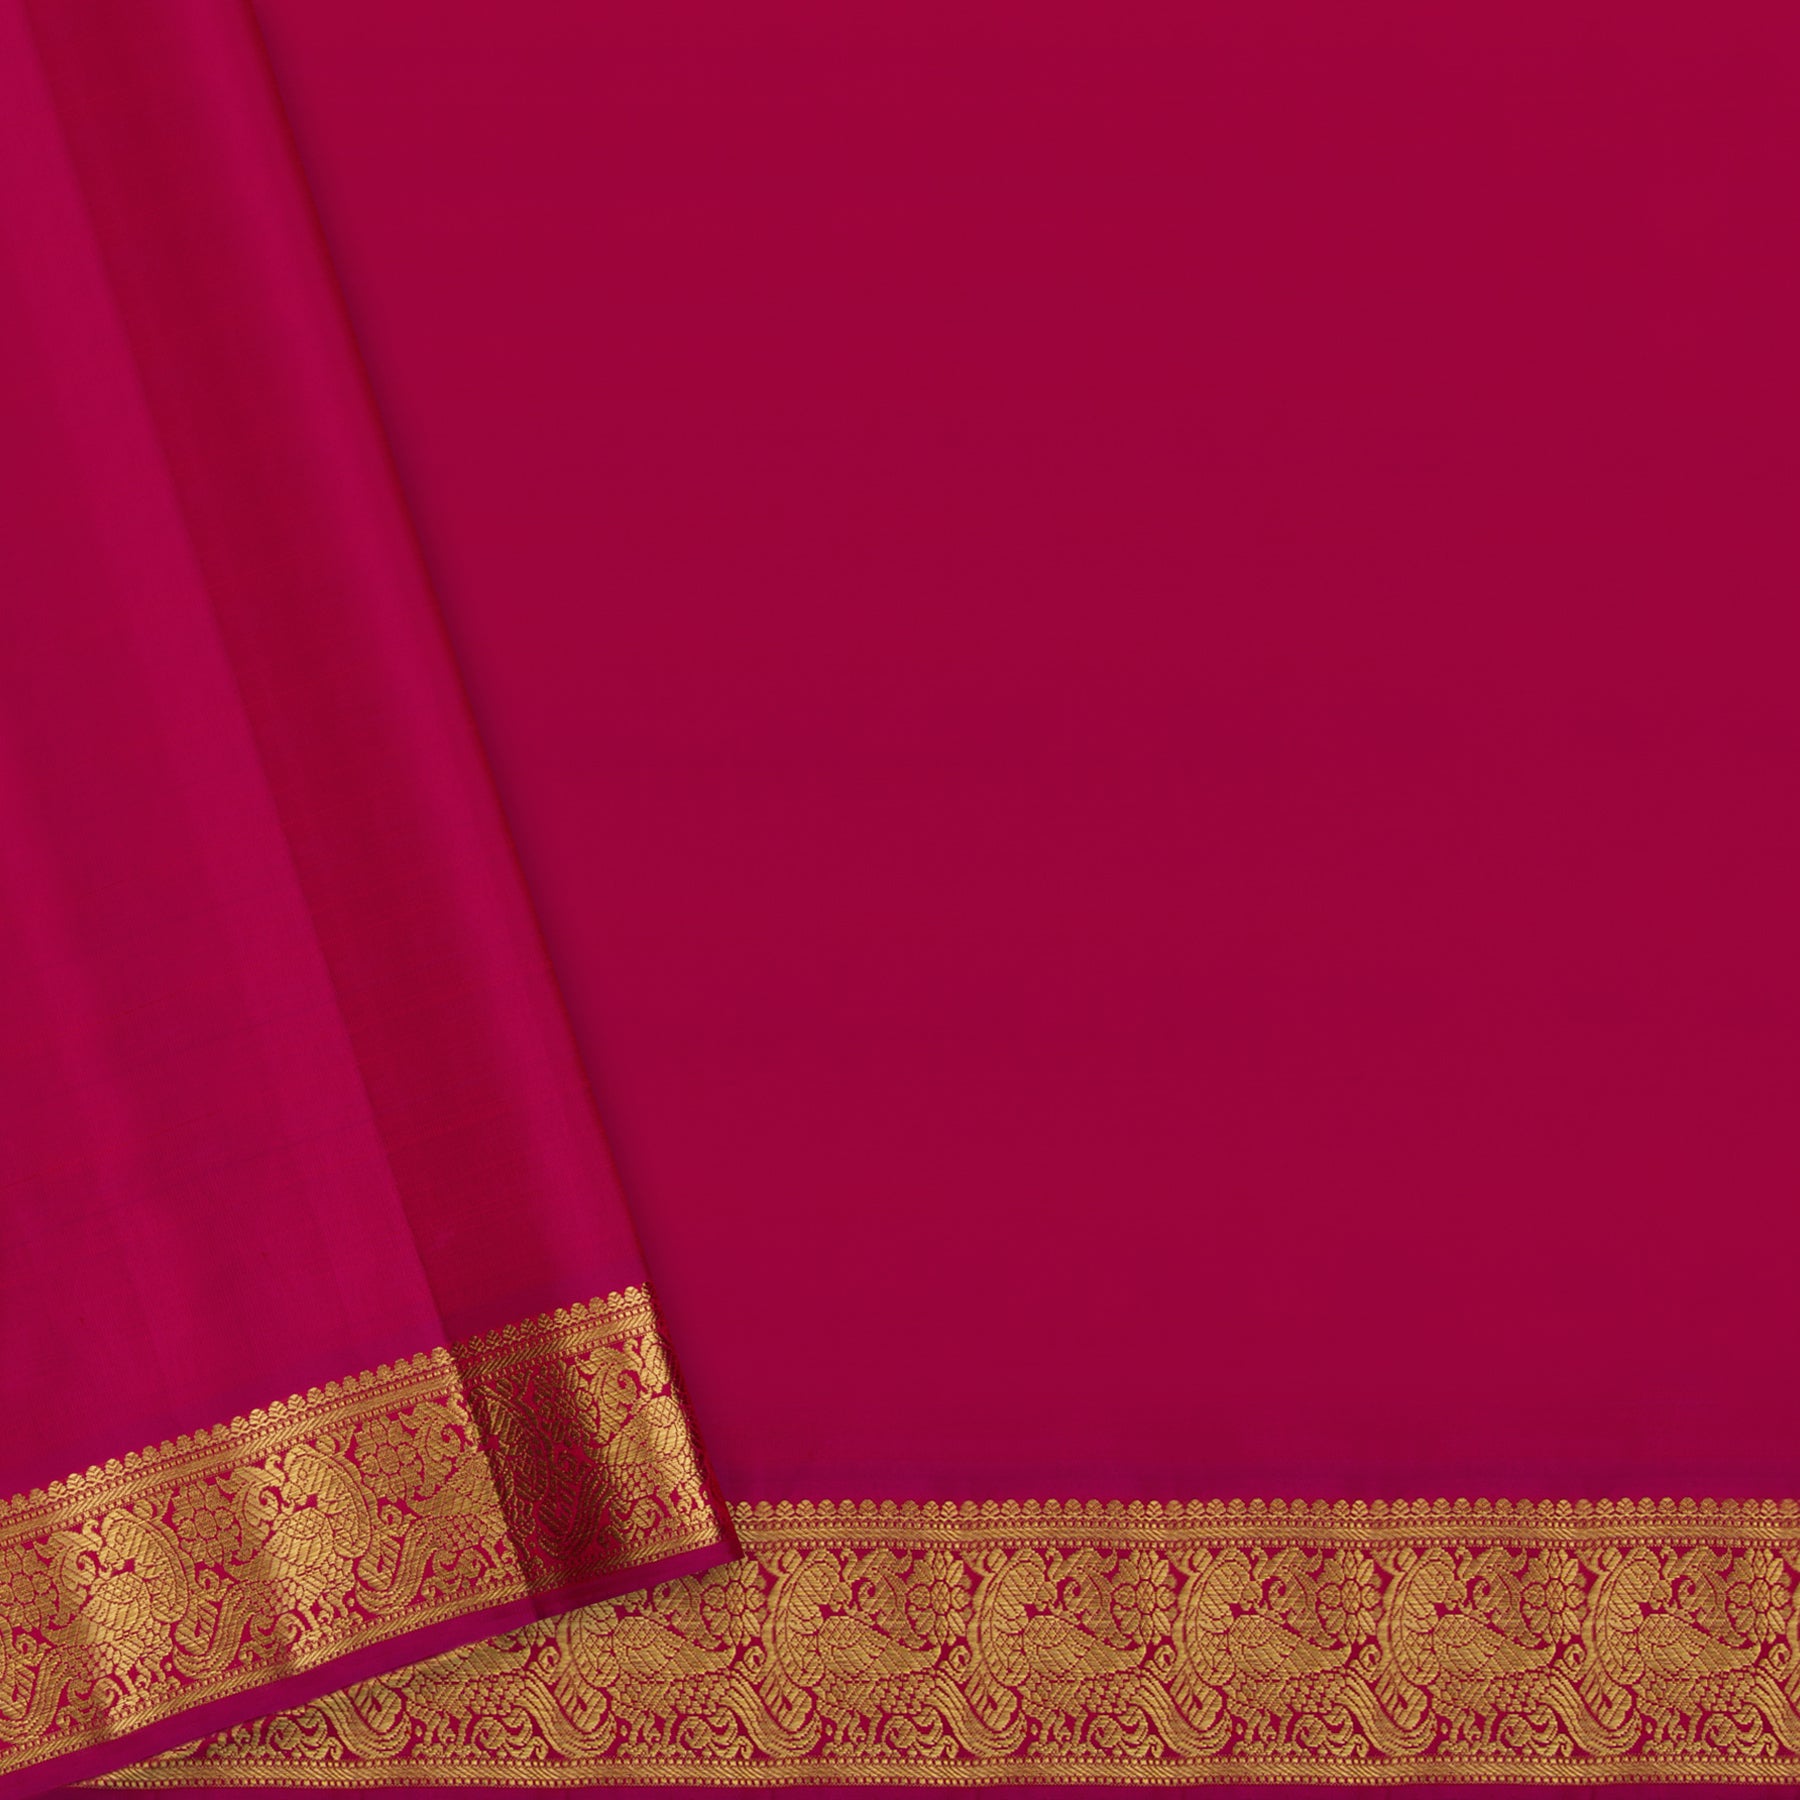 Kanakavalli Kanjivaram Silk Sari 23-599-HS001-13947 - Blouse View